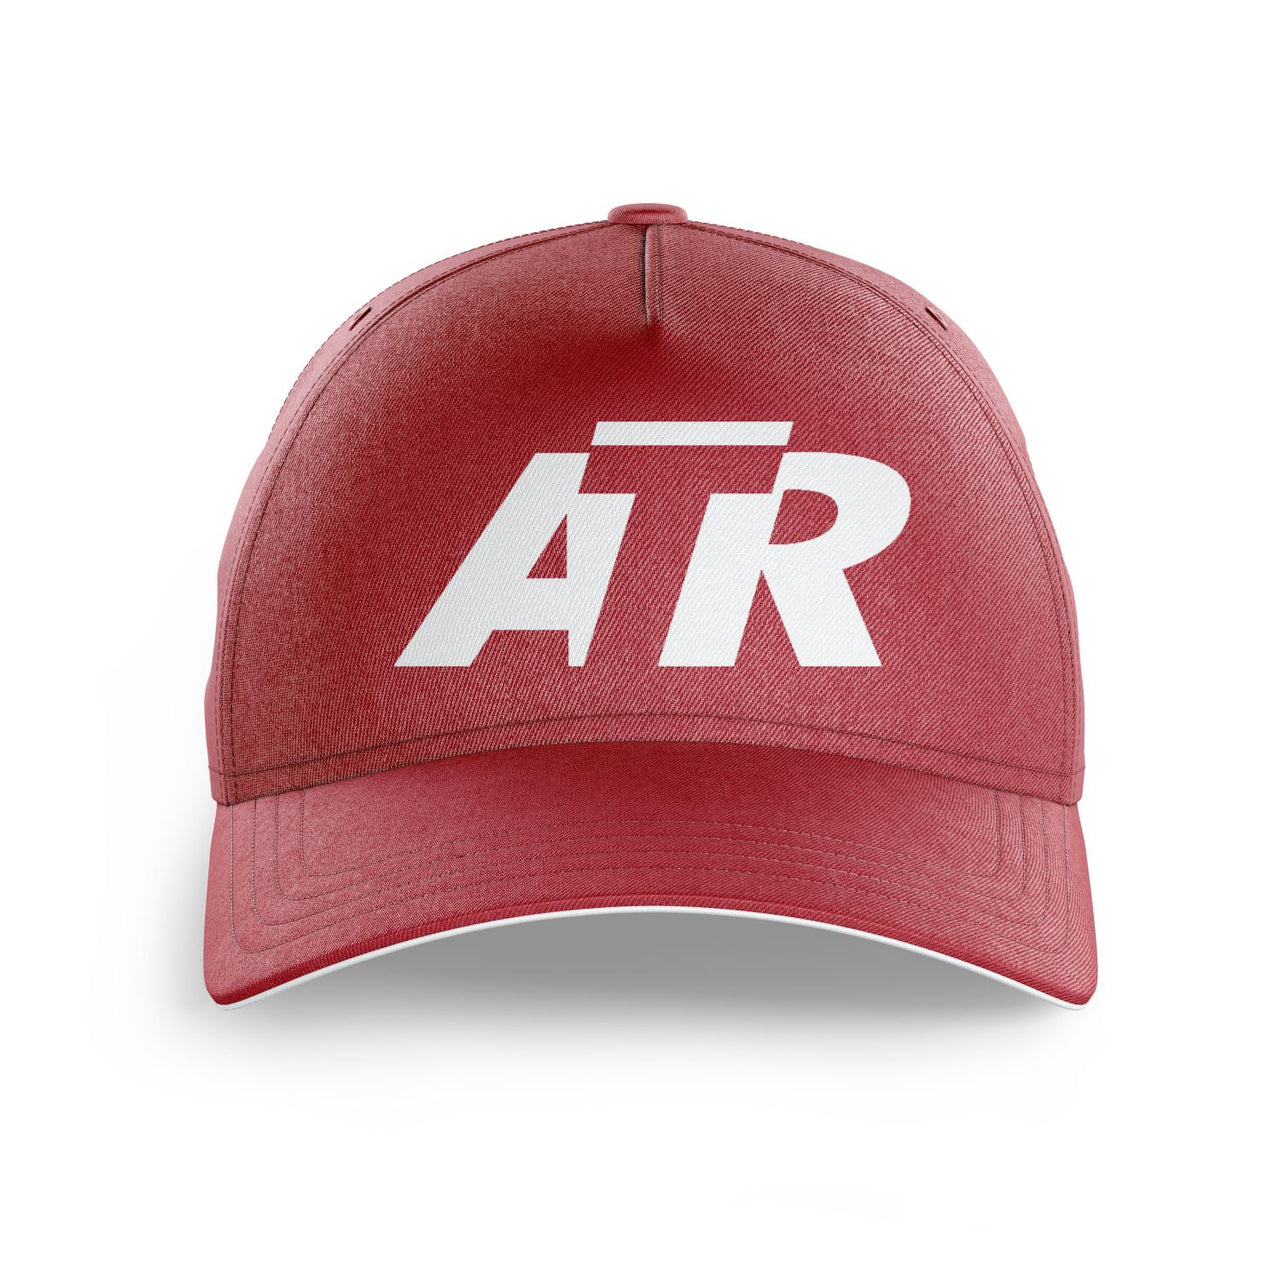 ATR & Text Printed Hats